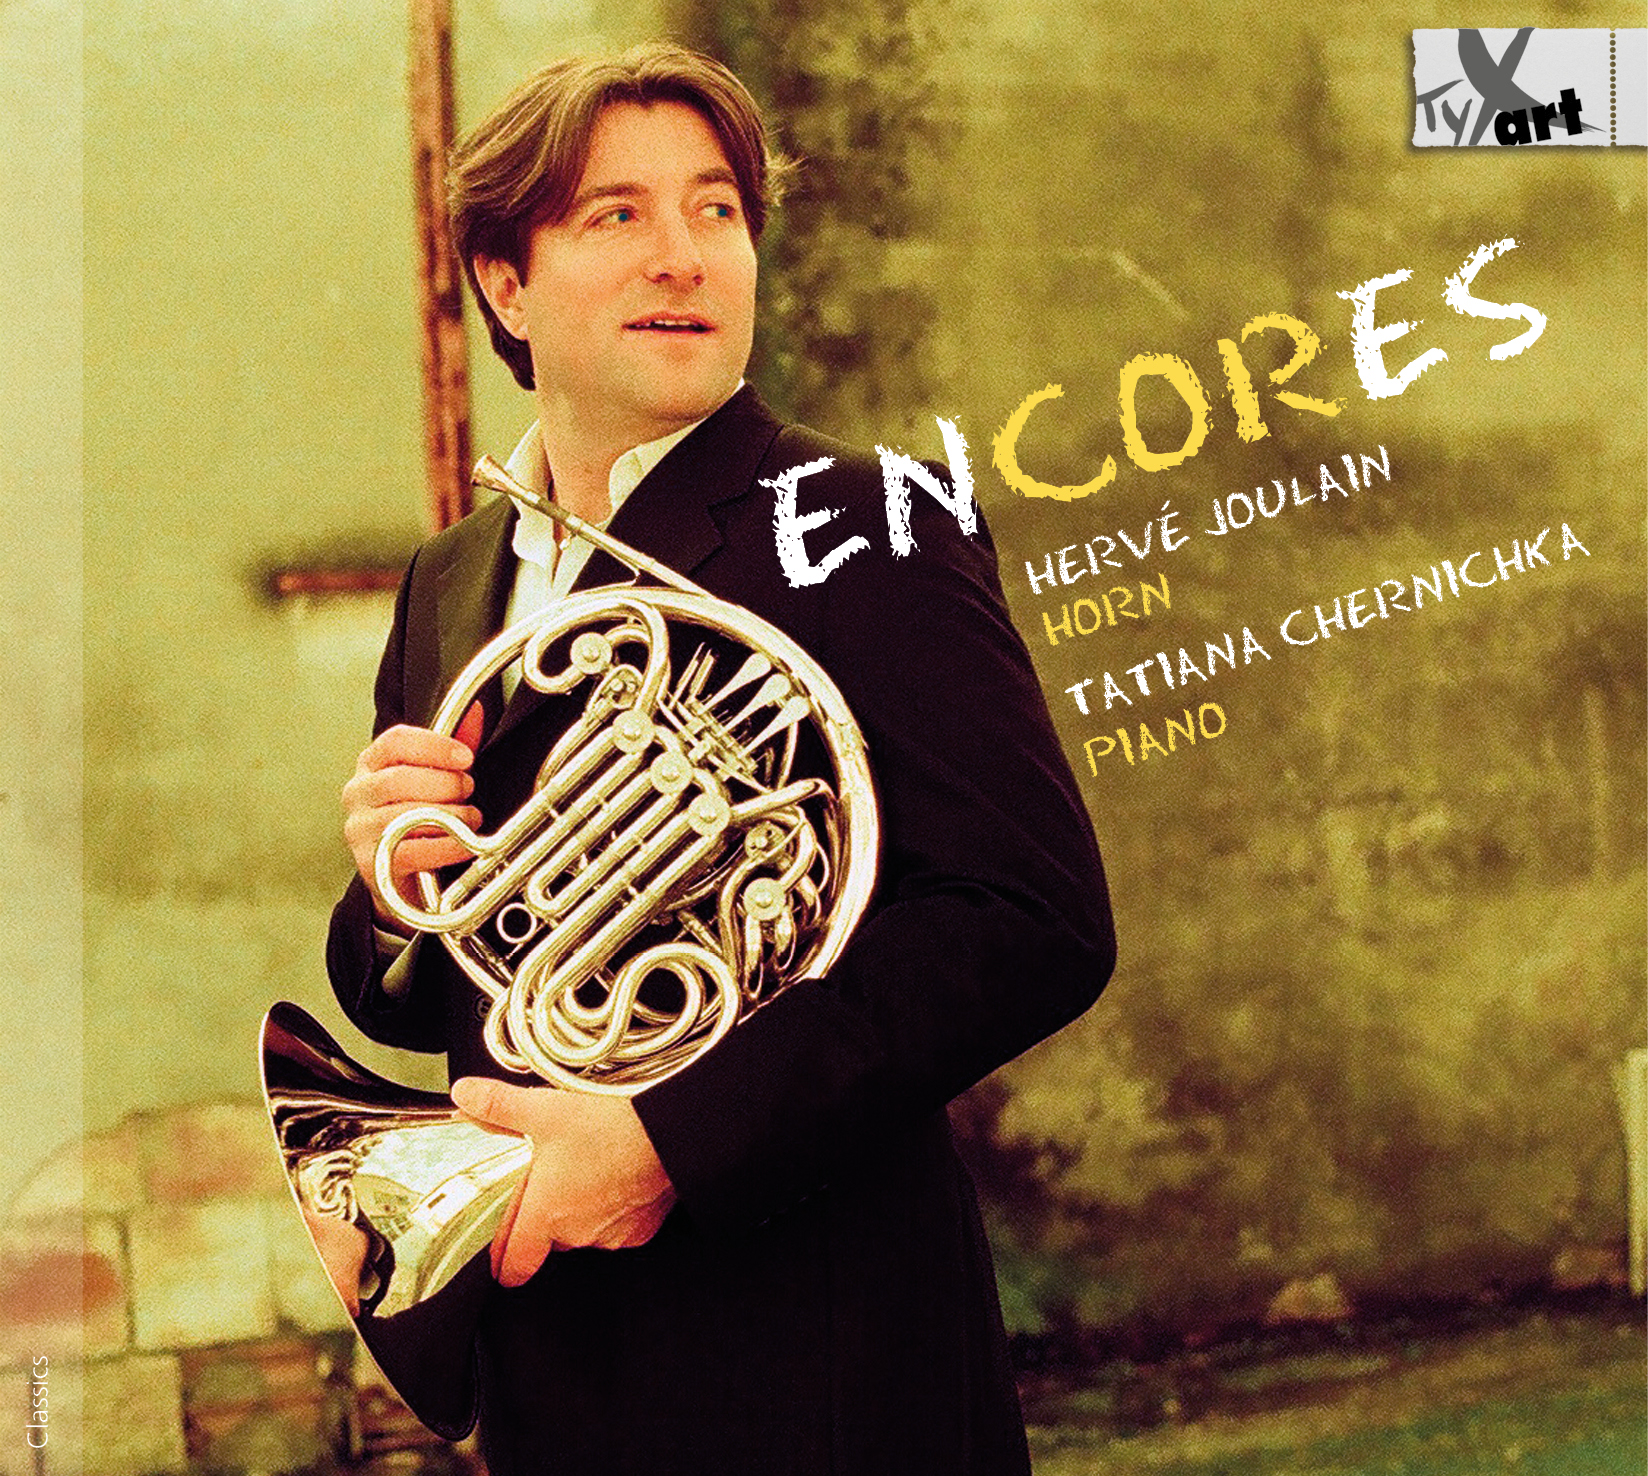 enCORes - Hervé Joulain, Horn -  Tatiana Chernichka, Klavier - & special guests